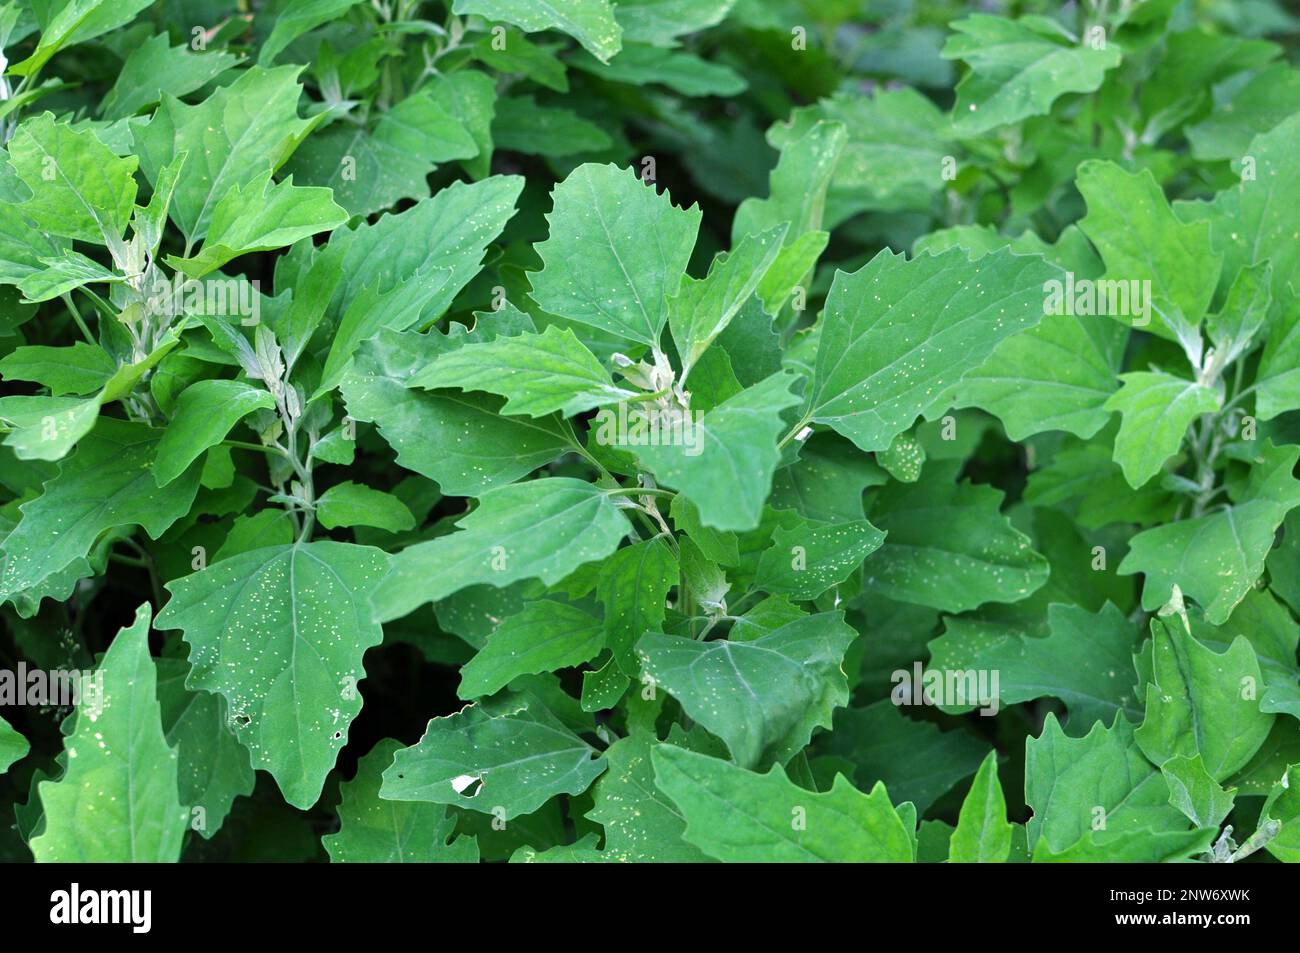 White quinoa (Chenopodium album) grows in wild nature Stock Photo